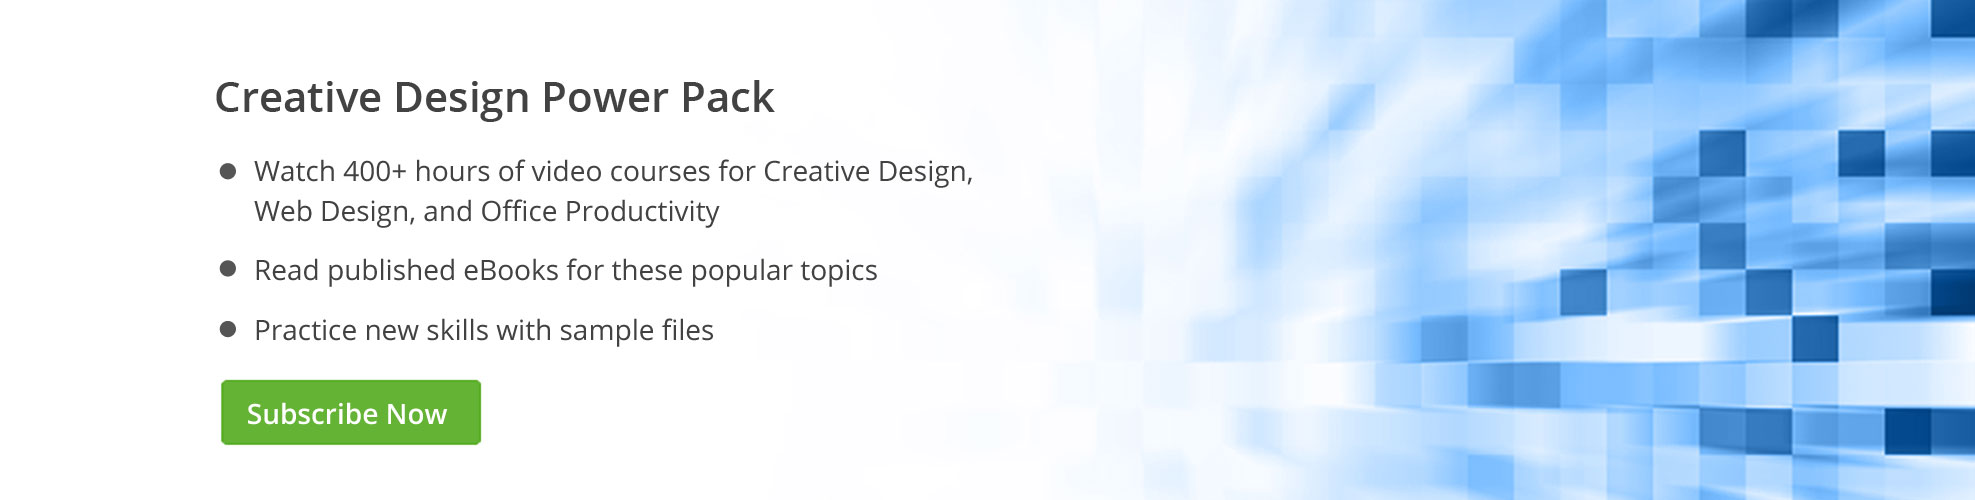 Creative Design Power Pack